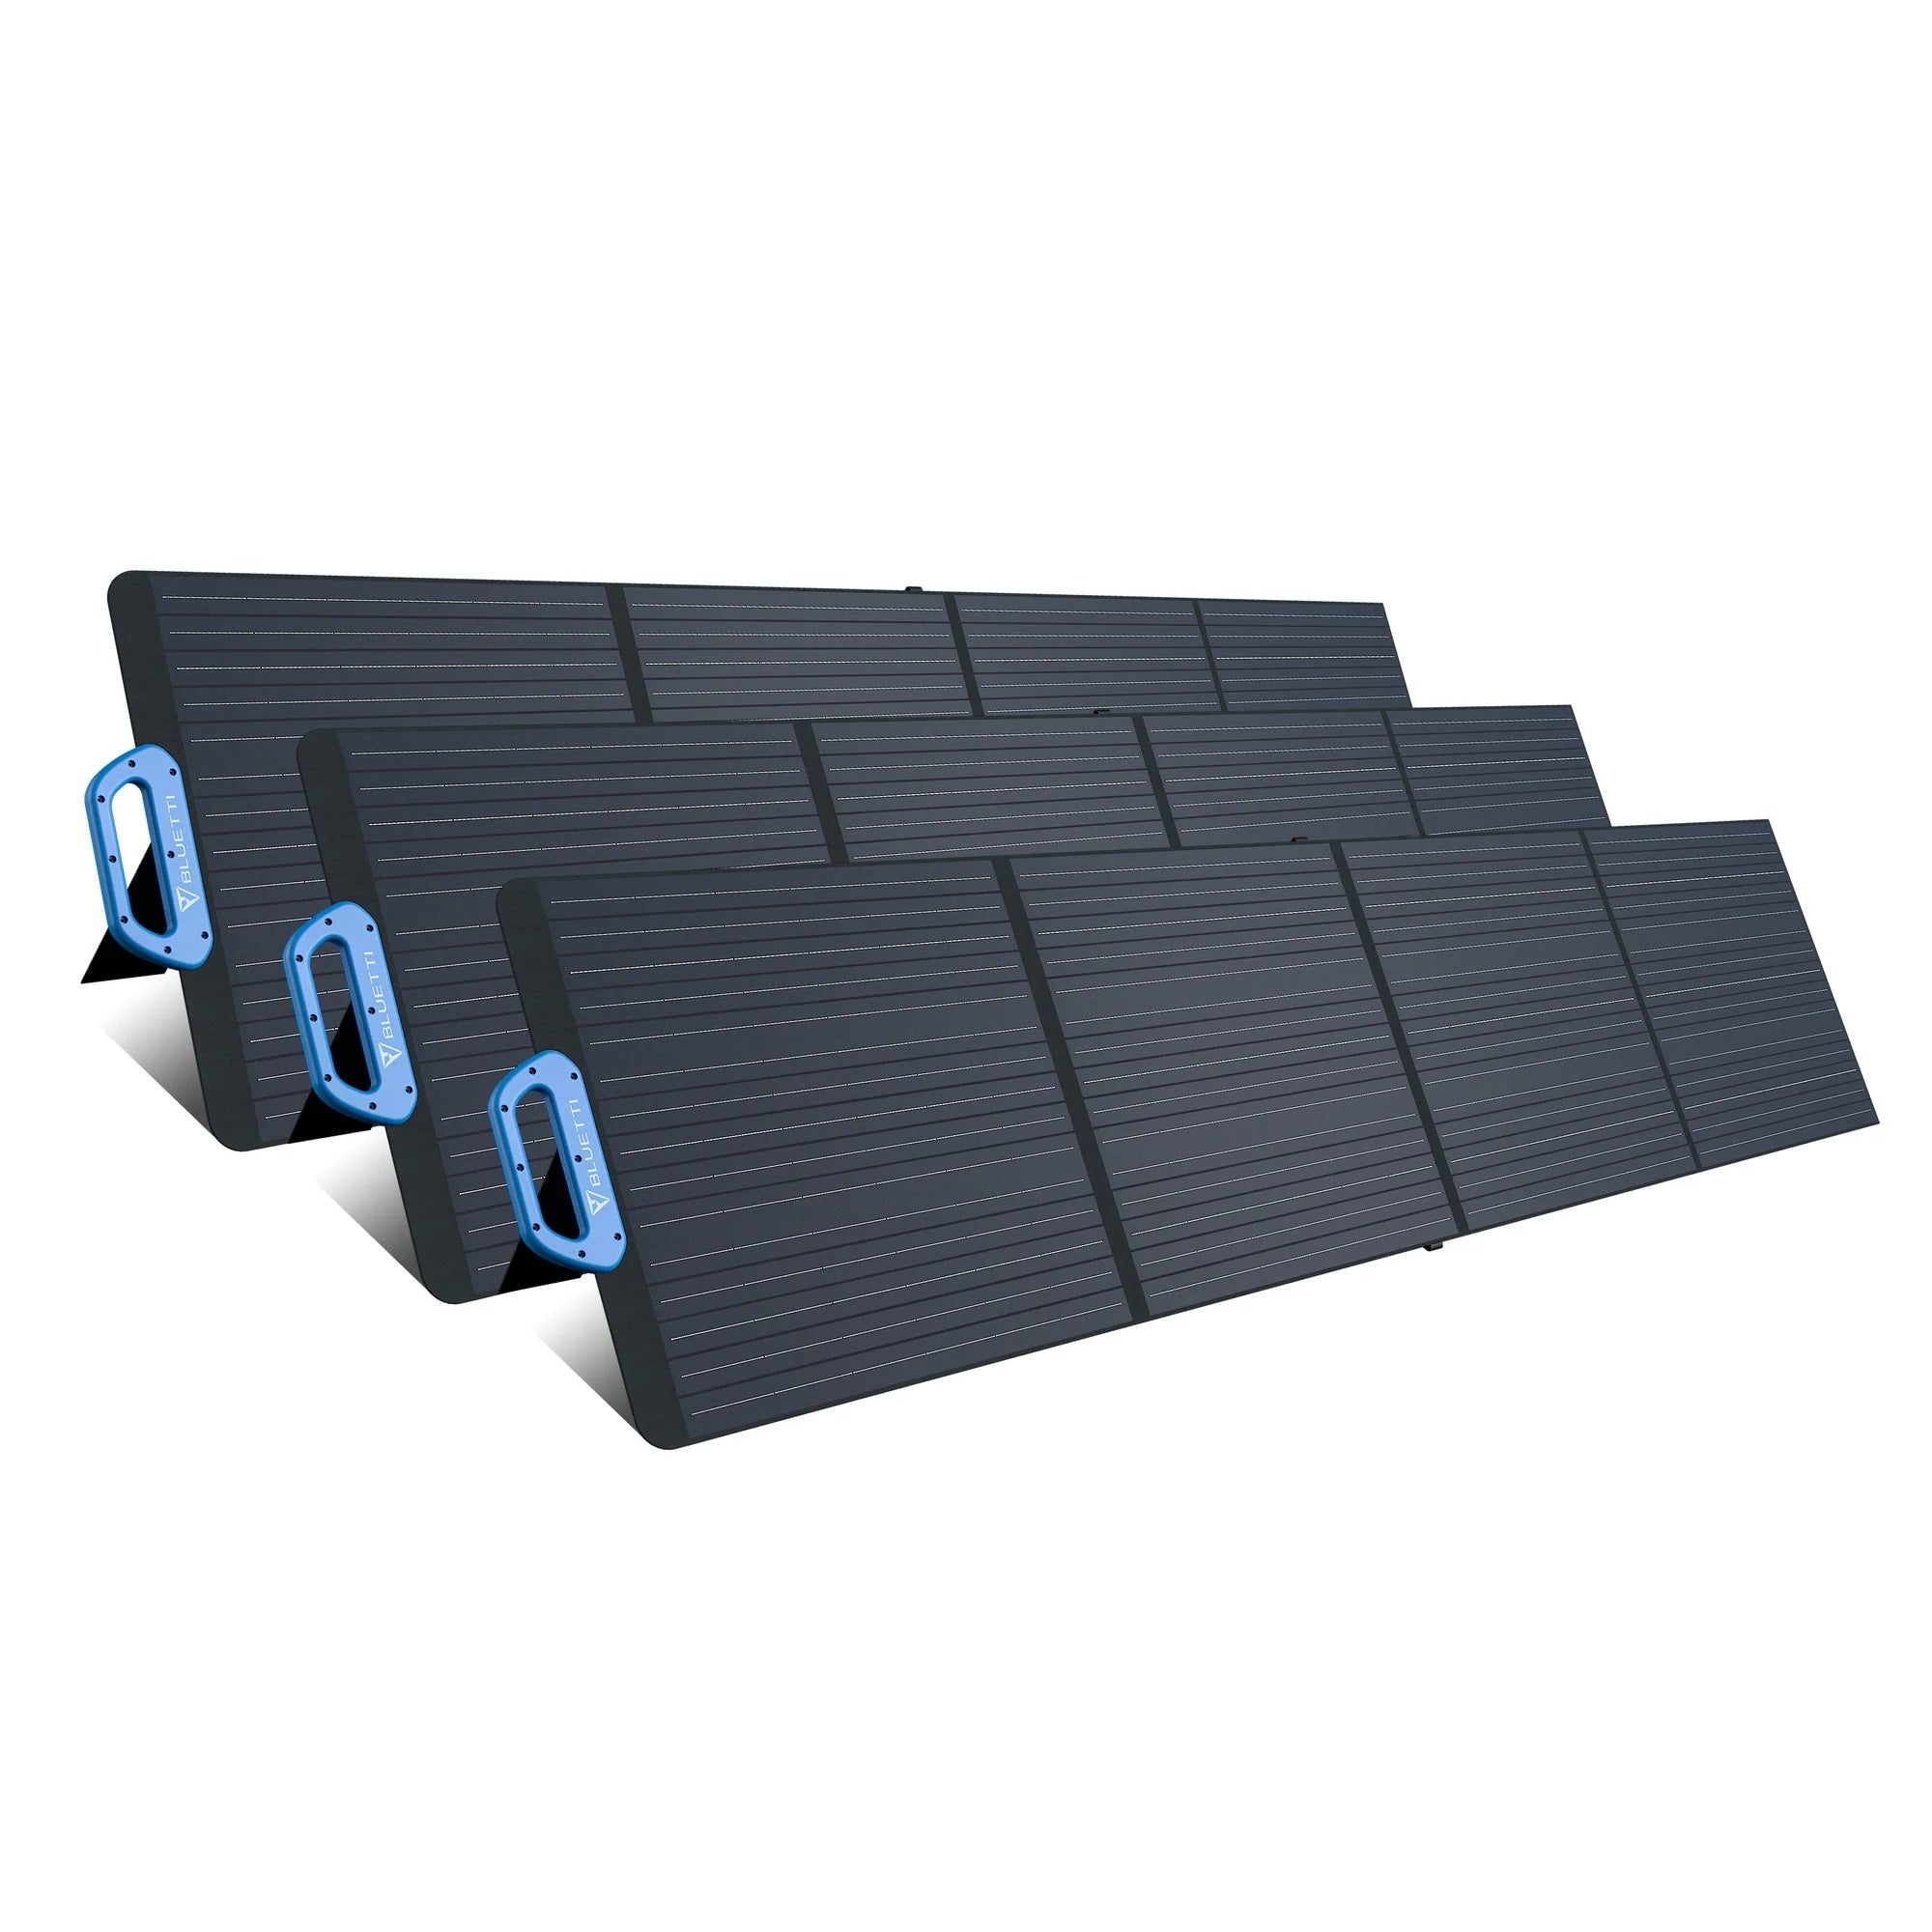 Pv200 Solar Panel